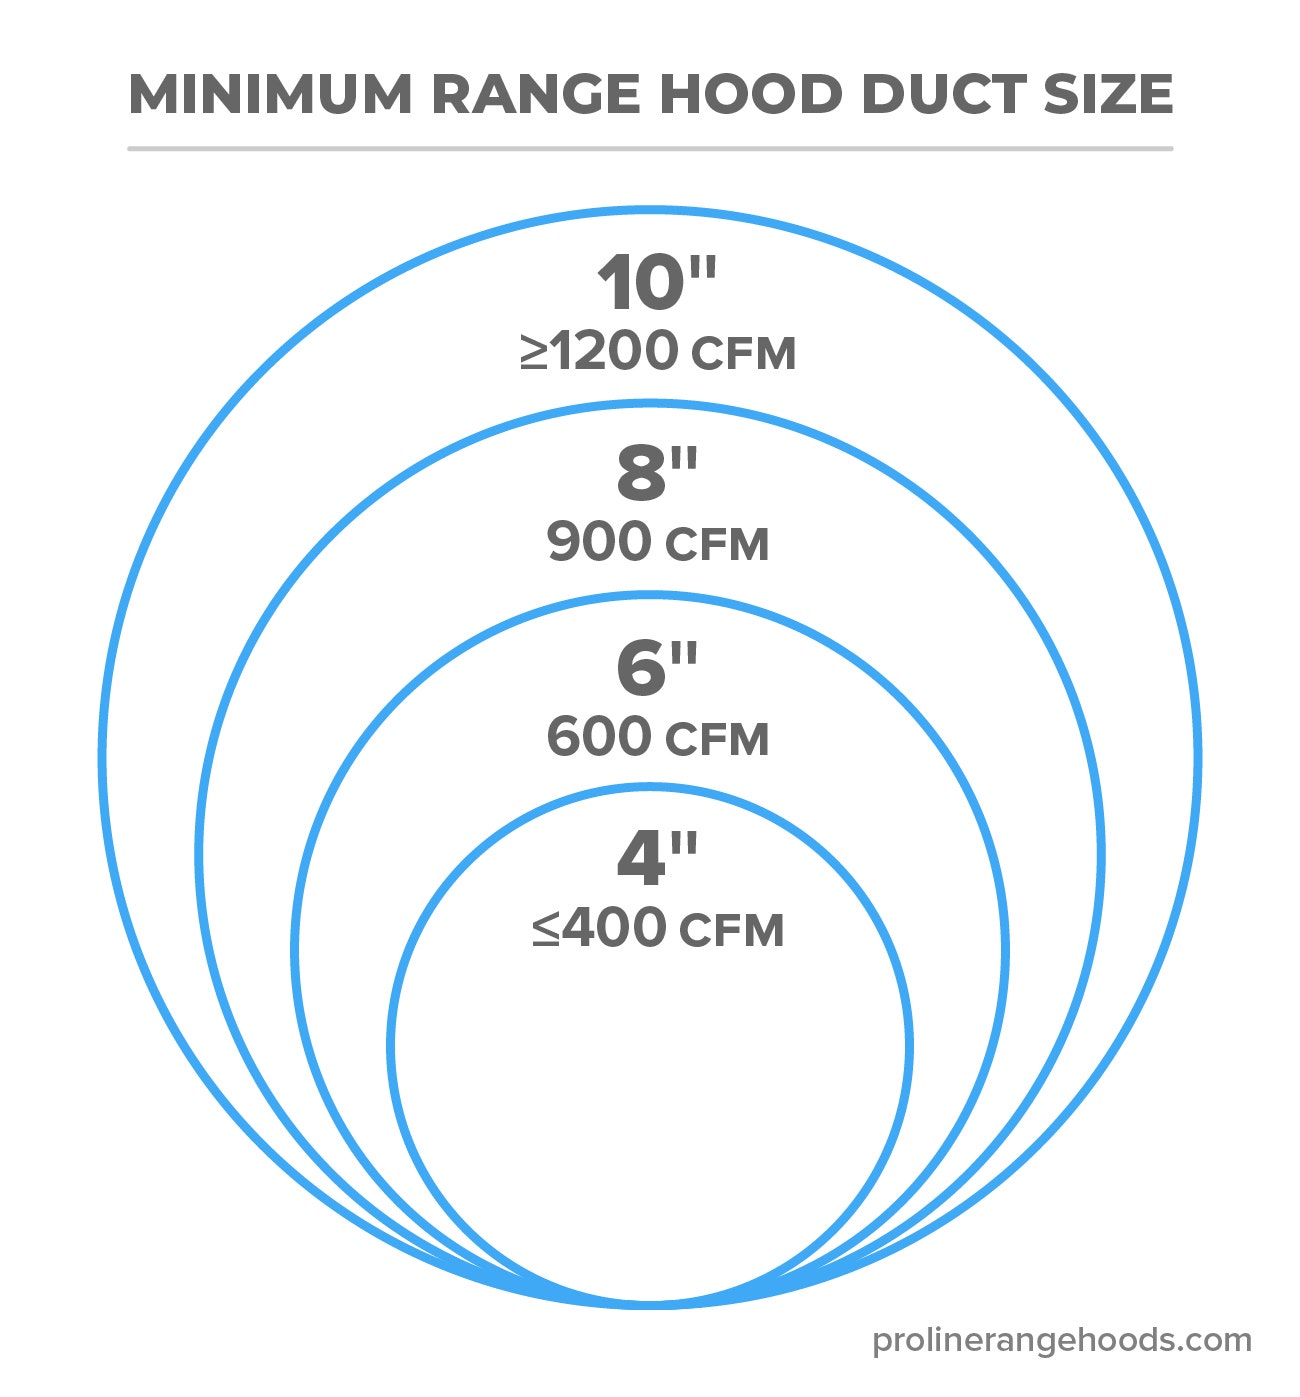 Minimum range hood duct size